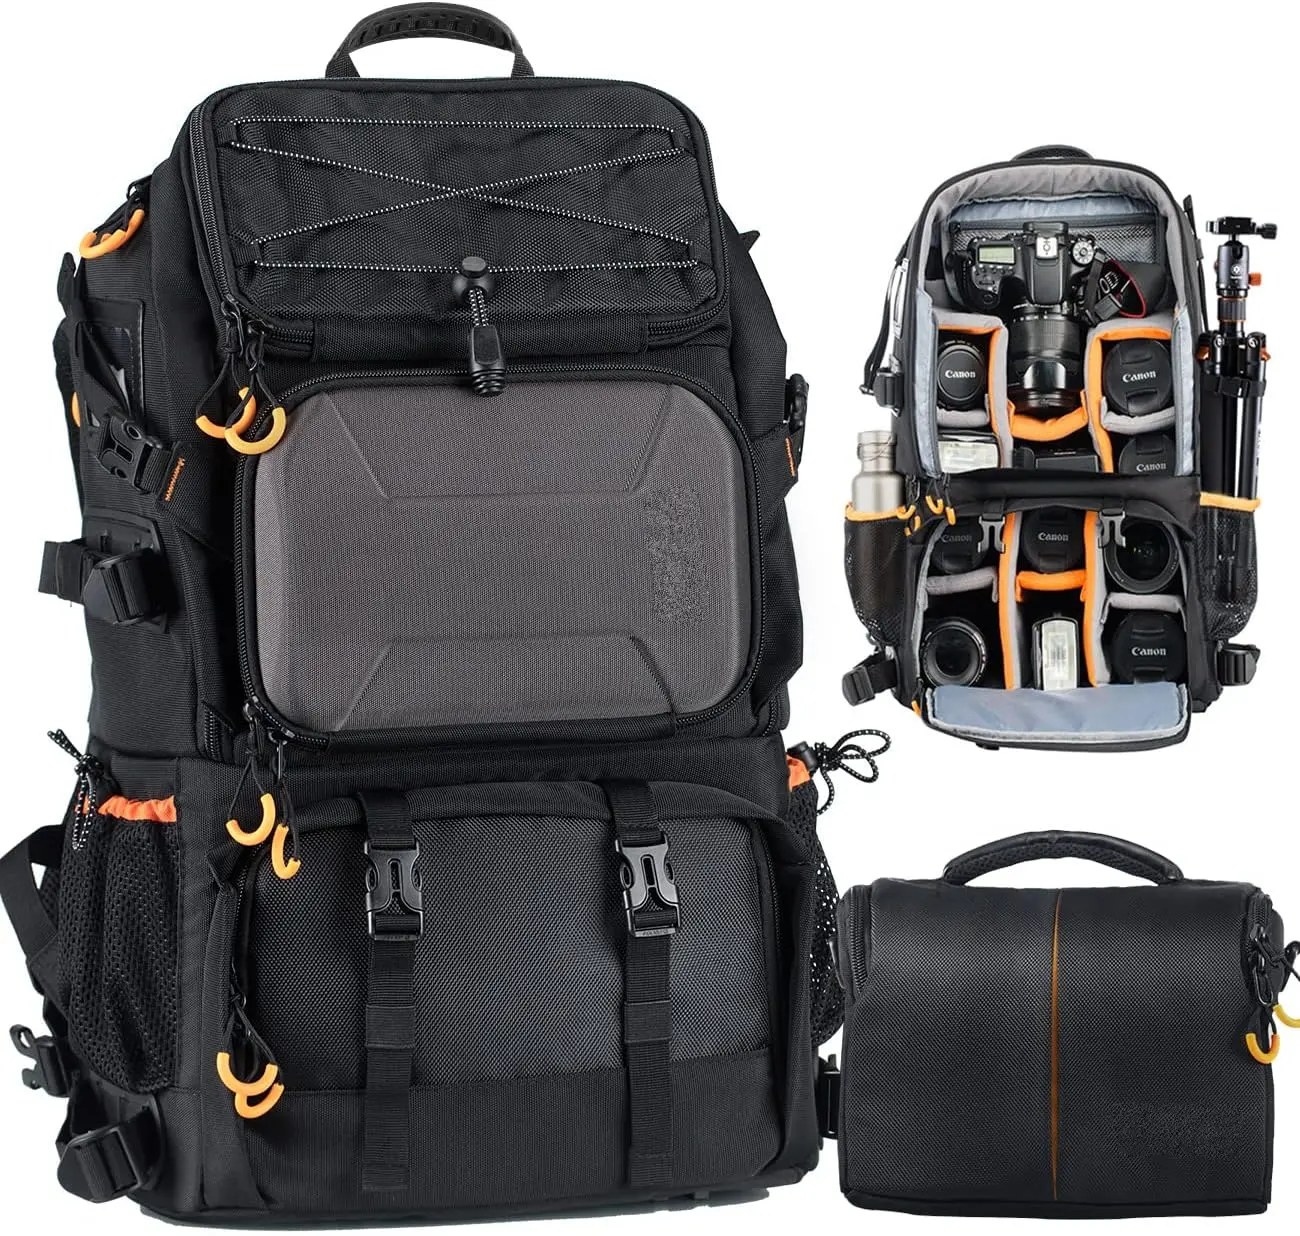 2 bolsas en 1 mochila para cámara grande con compartimento para portátil de 15,6 "cubierta de lluvia impermeable Mochila para cámara de senderismo de viaje Extra grande